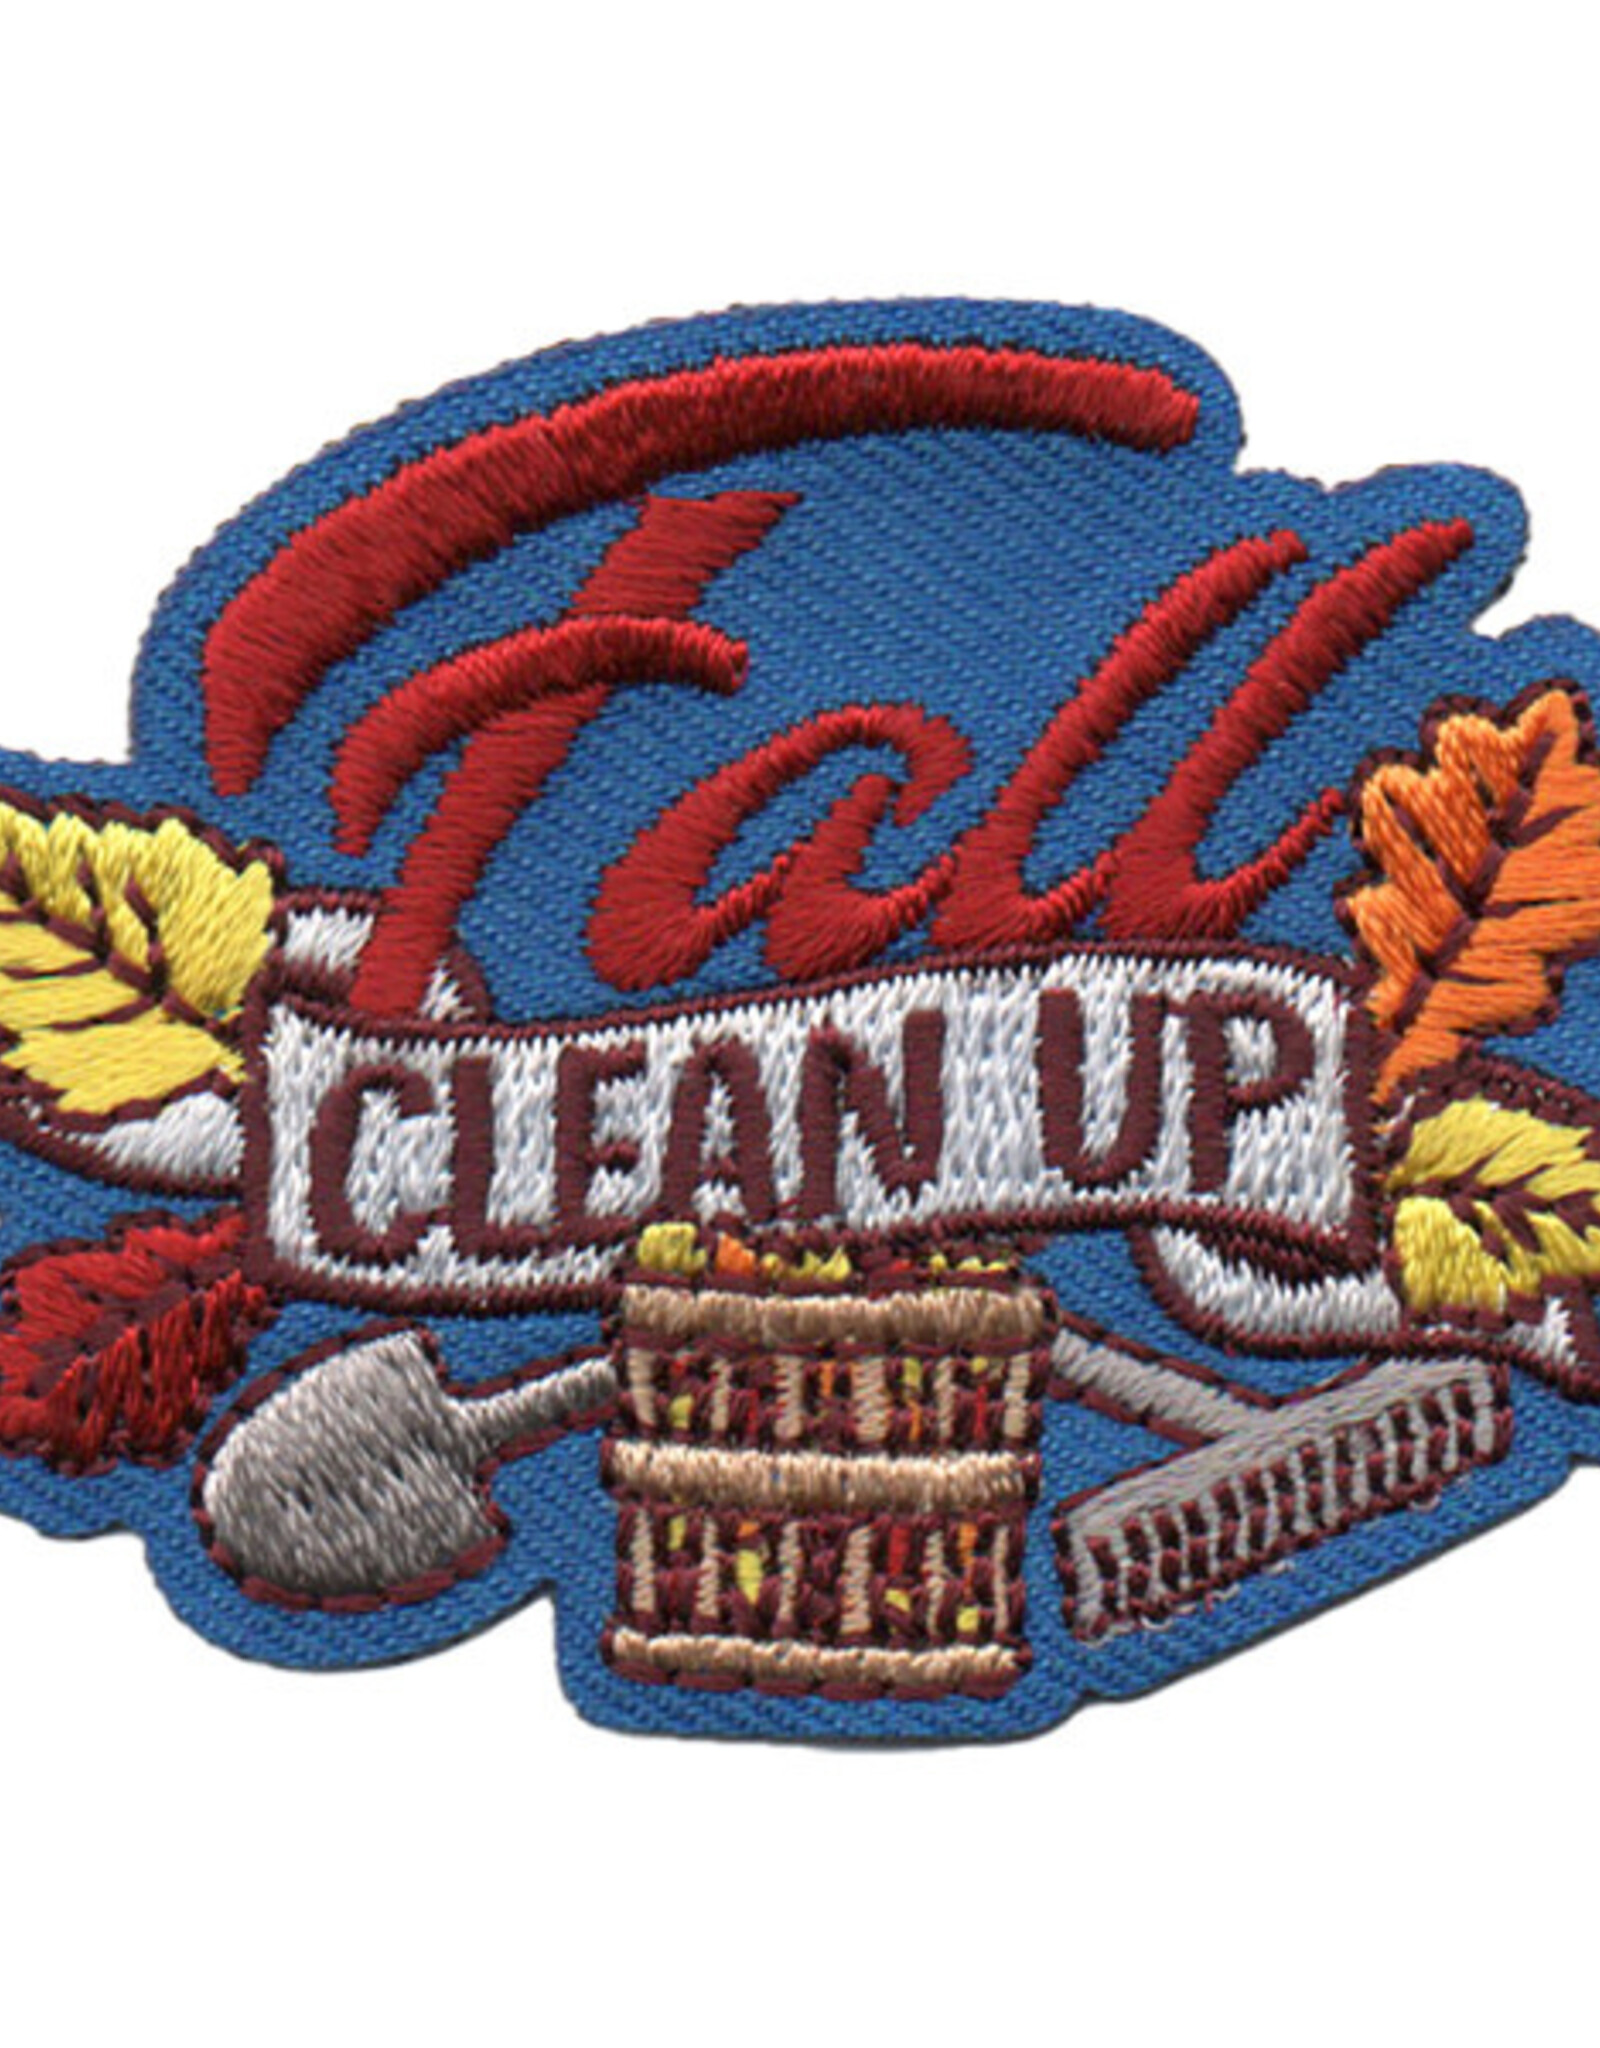 Advantage Emblem & Screen Prnt Fall Clean up/ Blue with Shovel and Rake